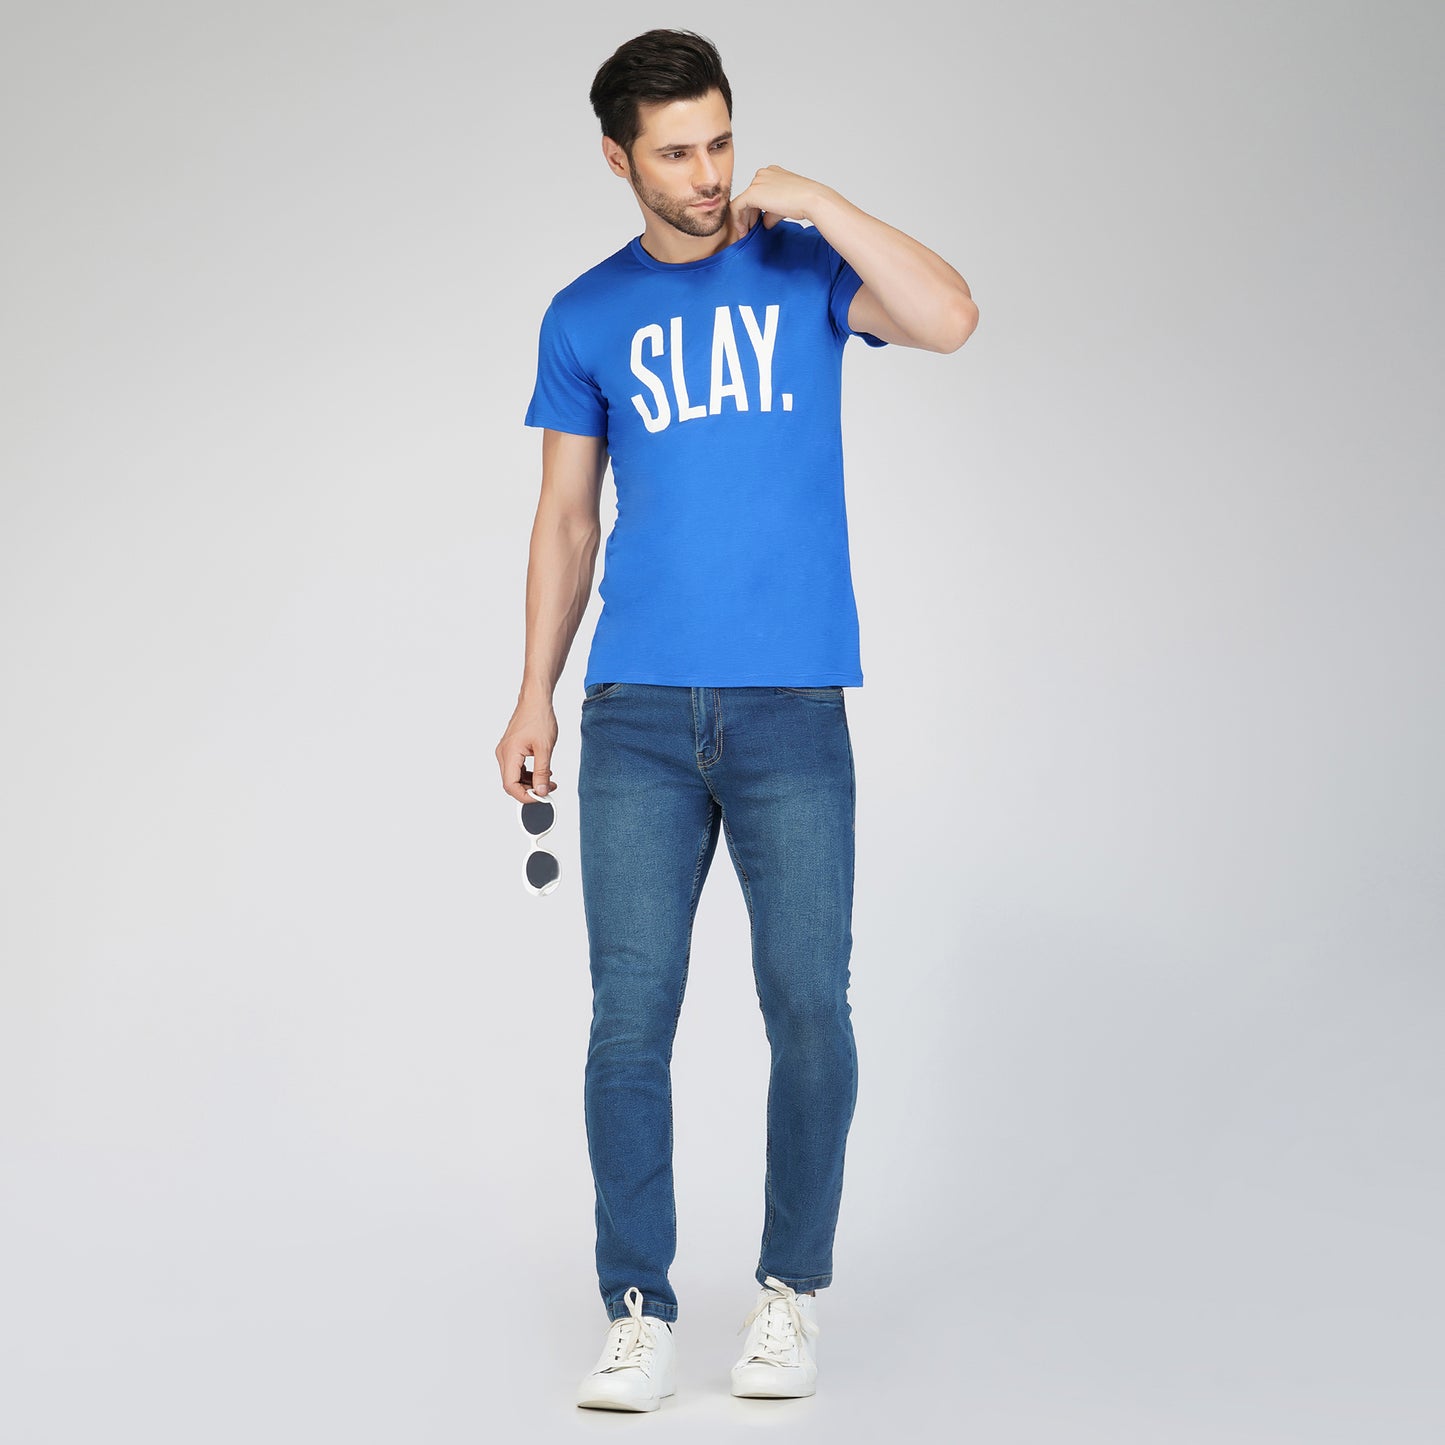 SLAY. Men's Blue Printed T-Shirt